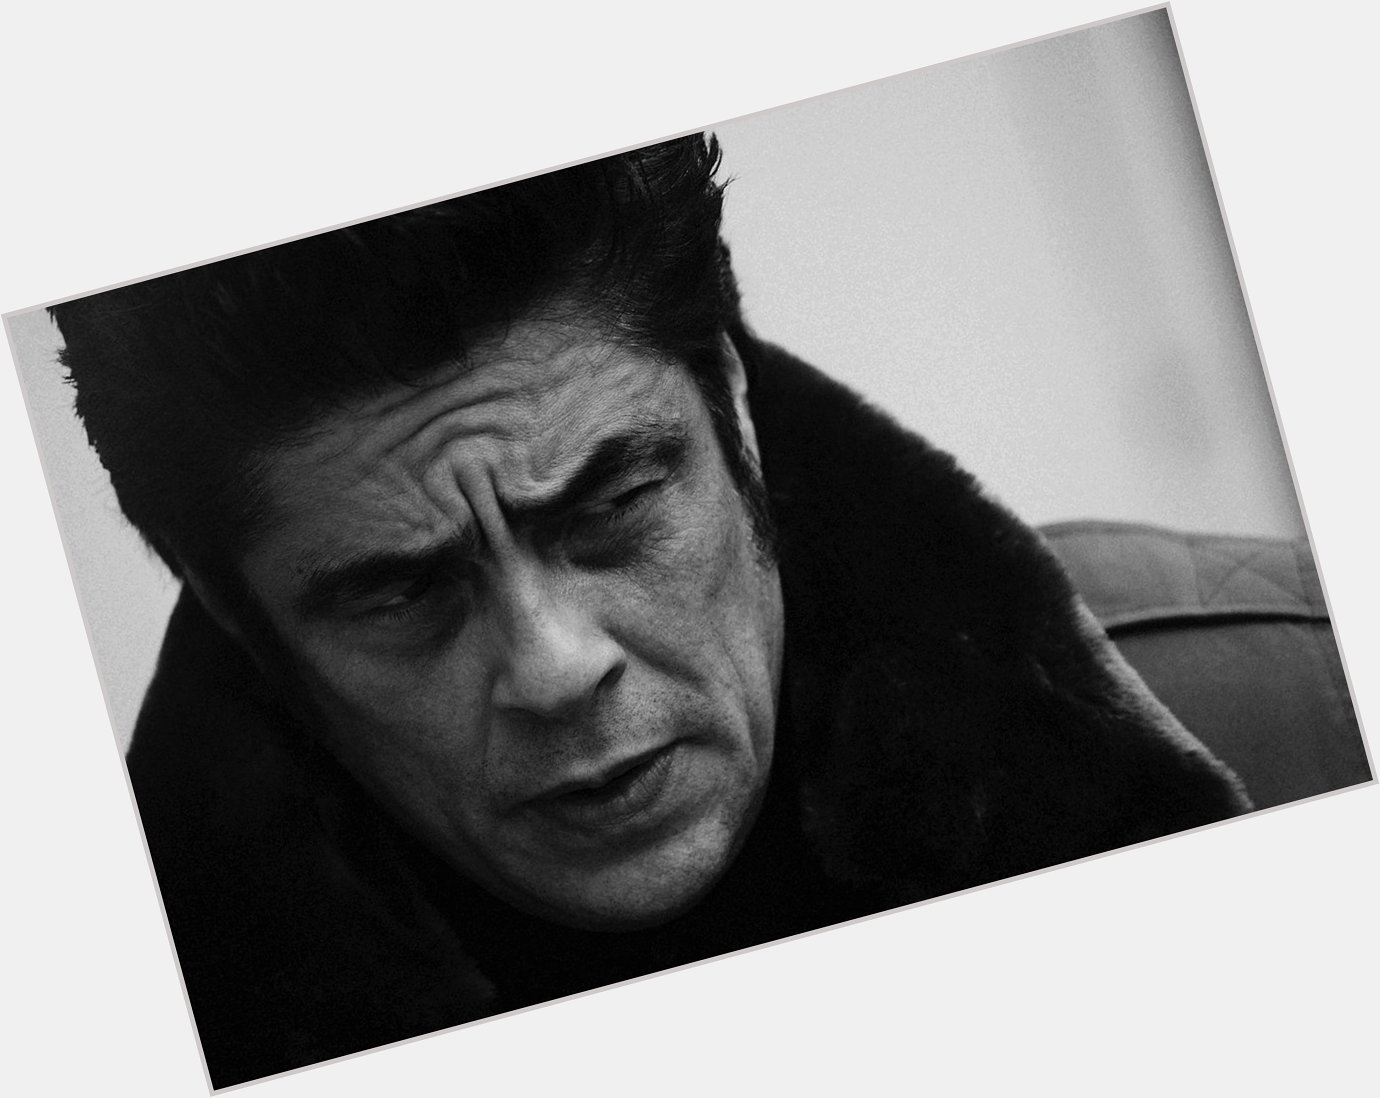 Hunk Benicio del Toro 50 jaar vandaag. 
Happy Birthday (fav pic btw) 